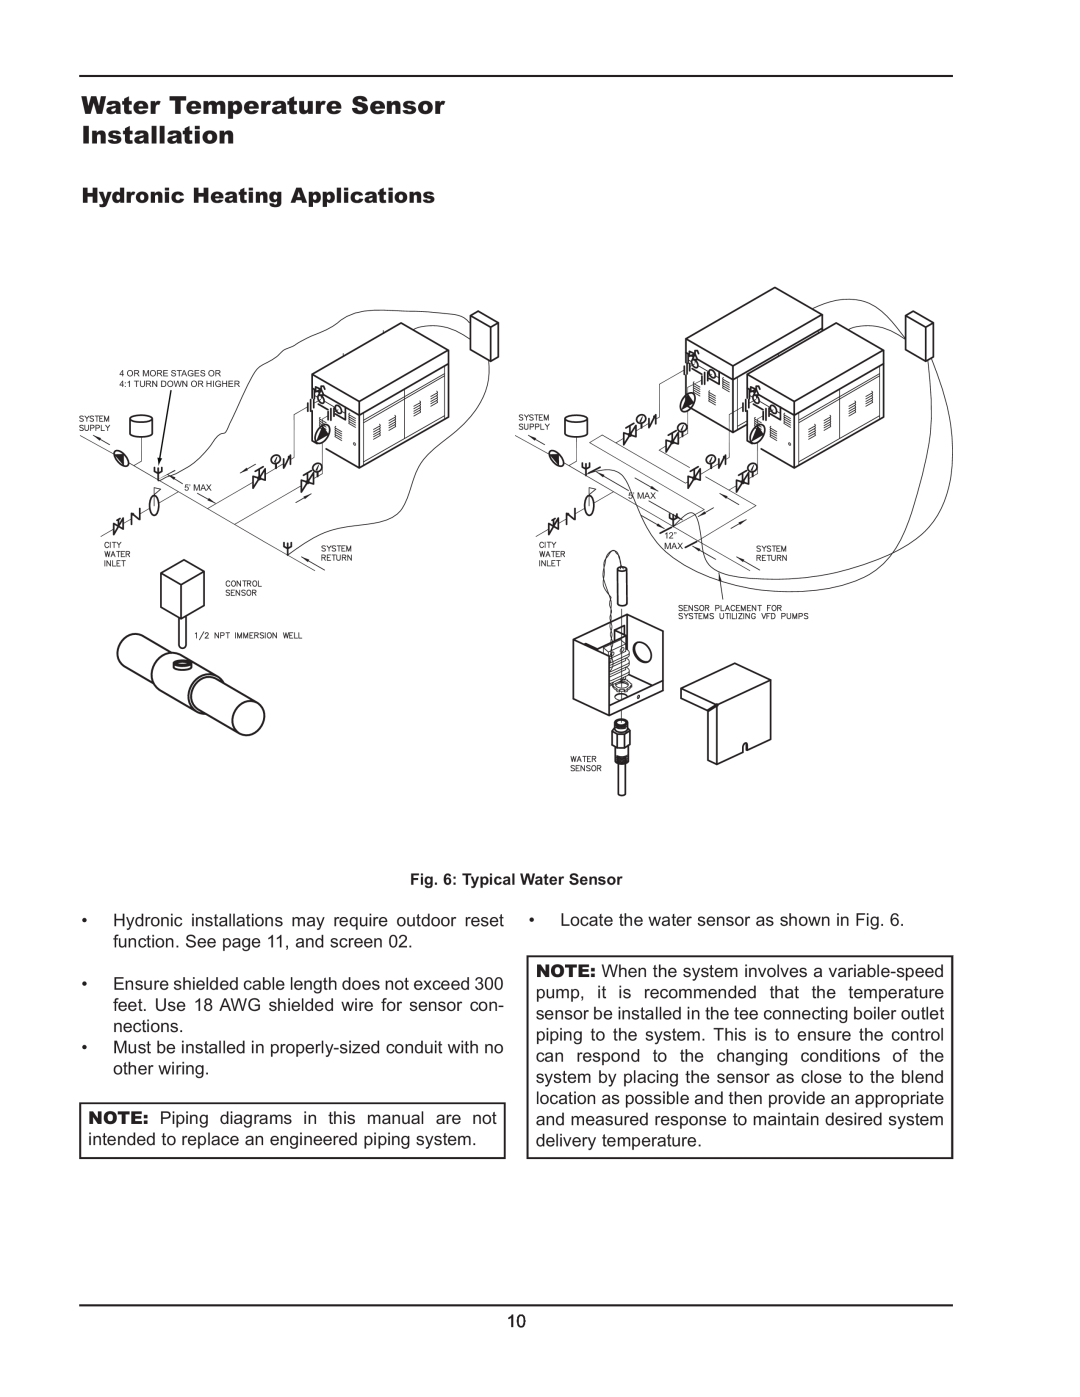 Raypak Y-200 manual Water Temperature Sensor Installation, Hydronic Heating Applications 